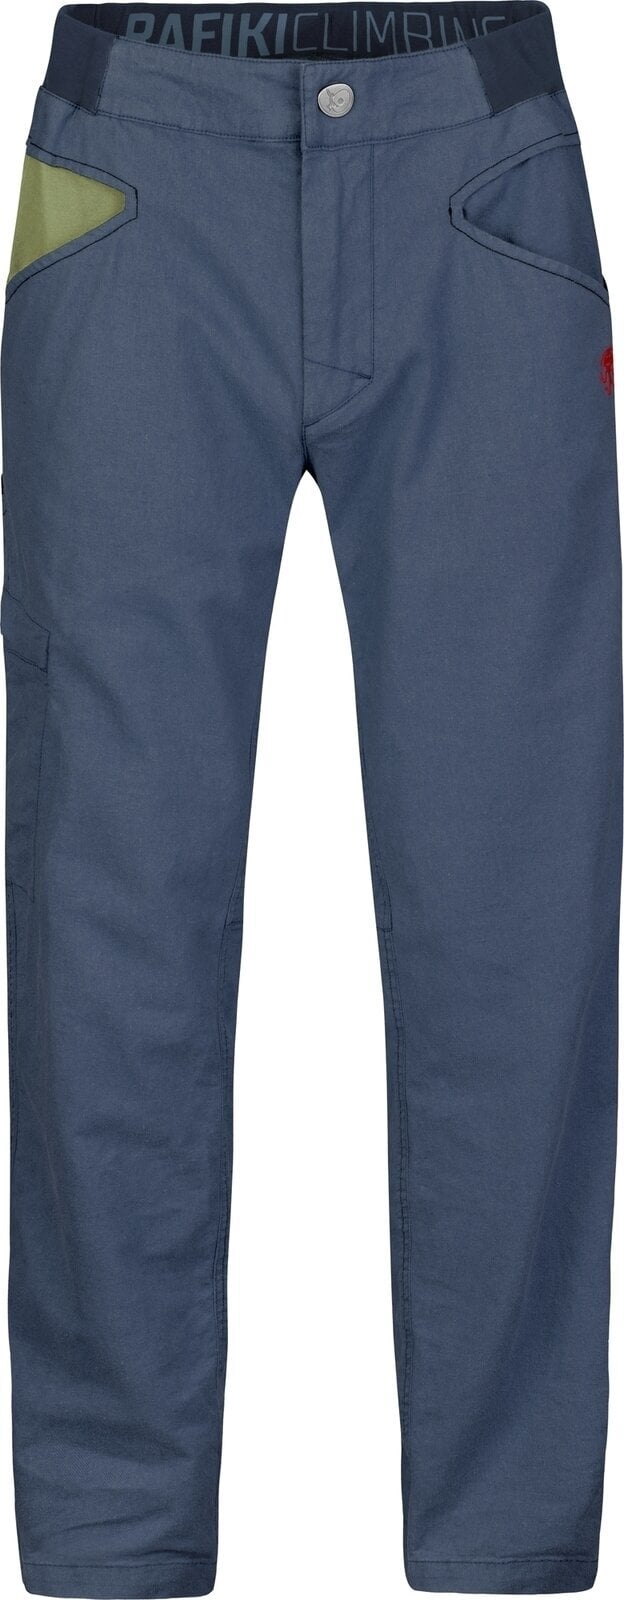 Outdoor Pants Rafiki Grip Man Pants India Ink S Outdoor Pants